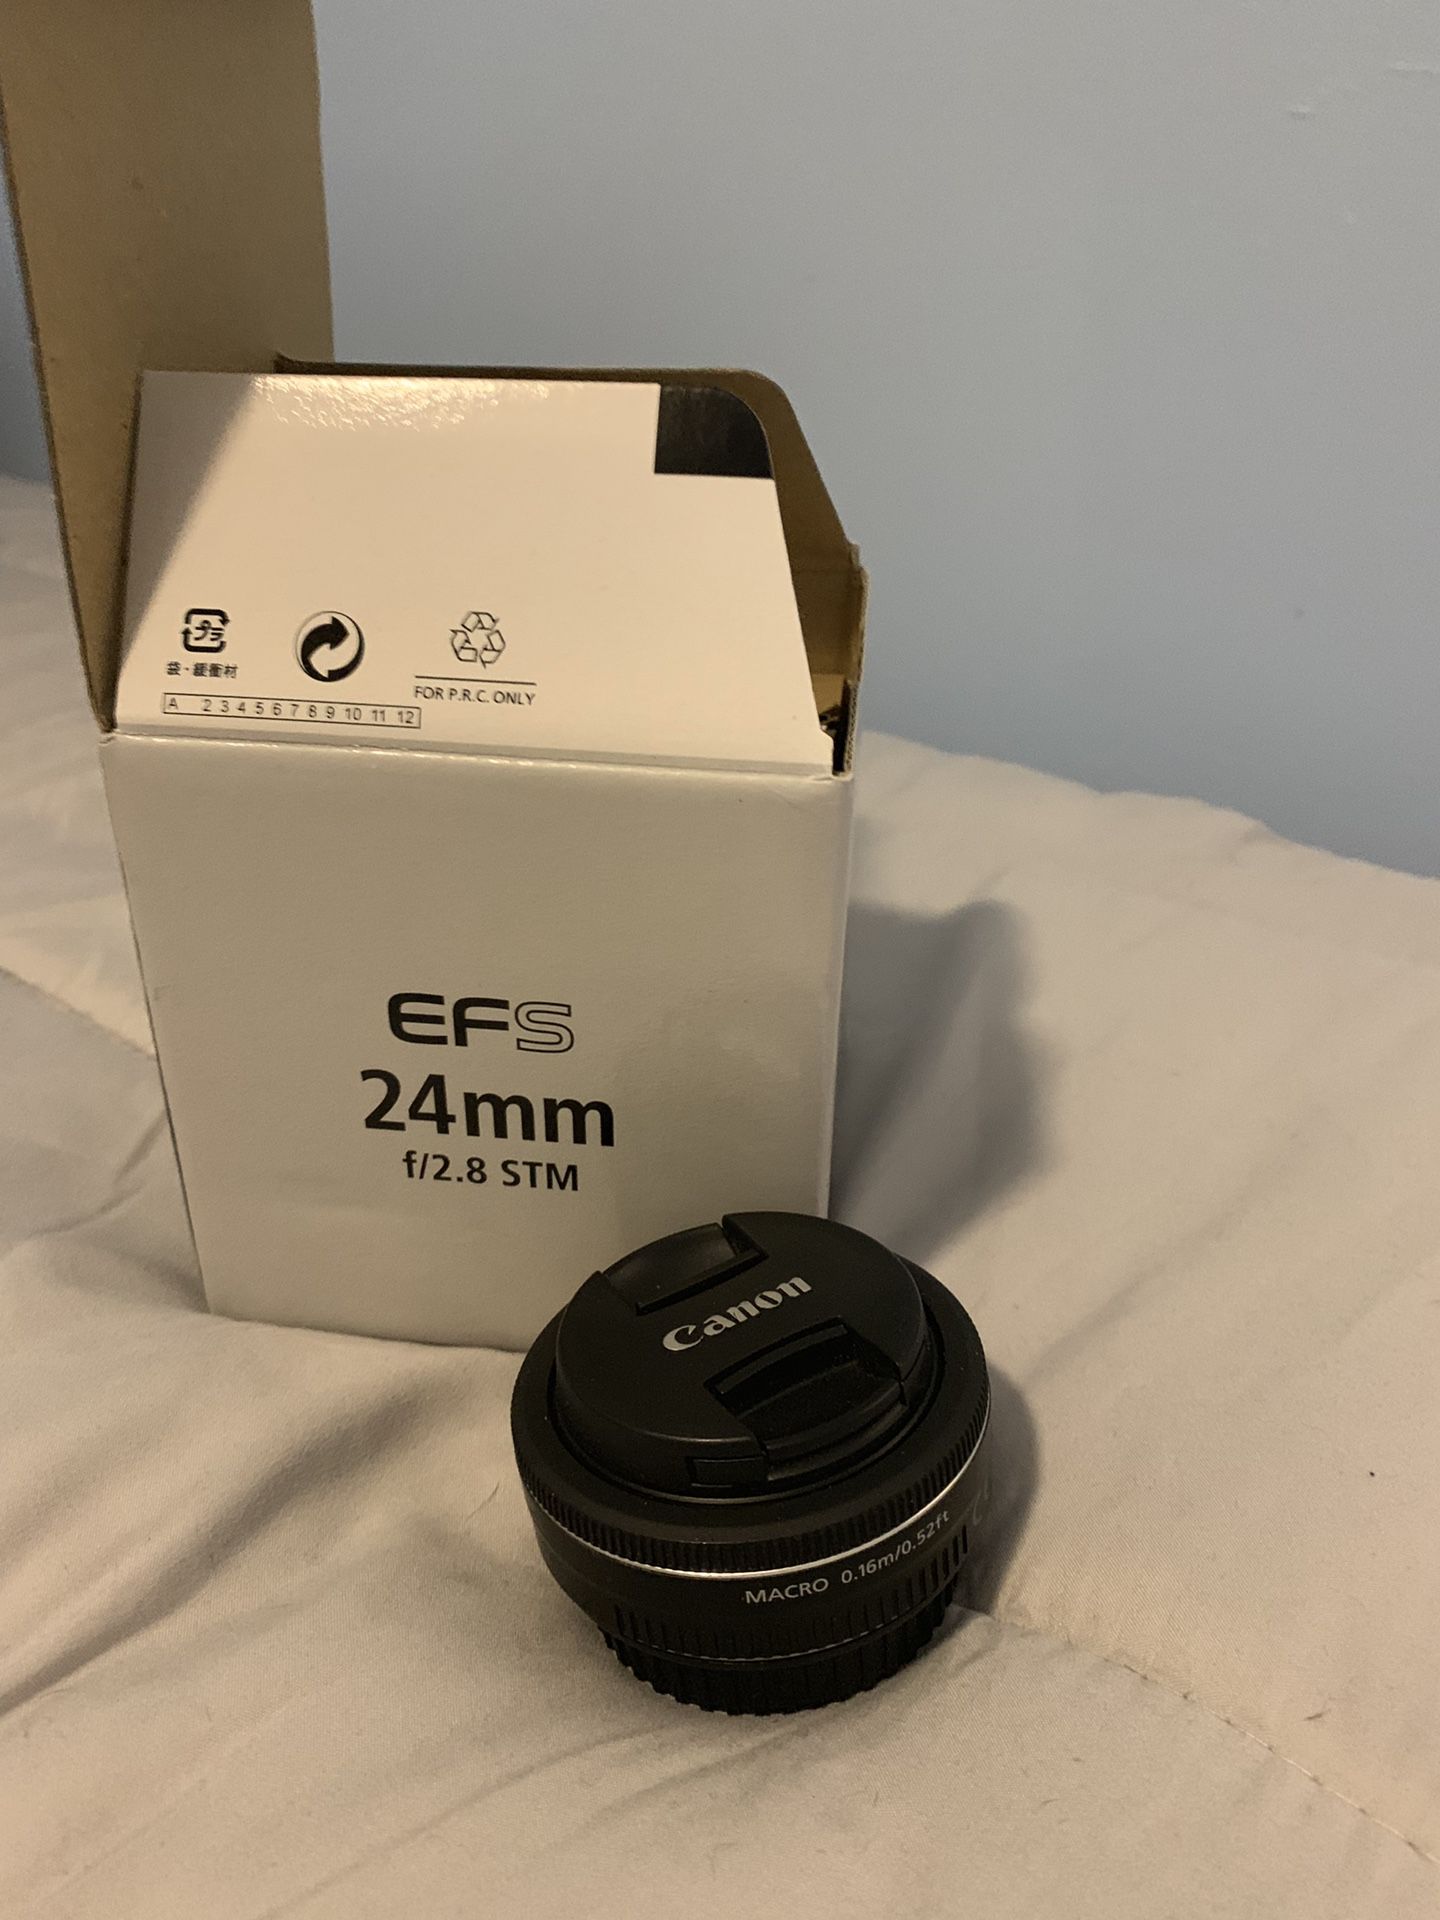 Canon EFS 24mm f2.8 STM prime lens